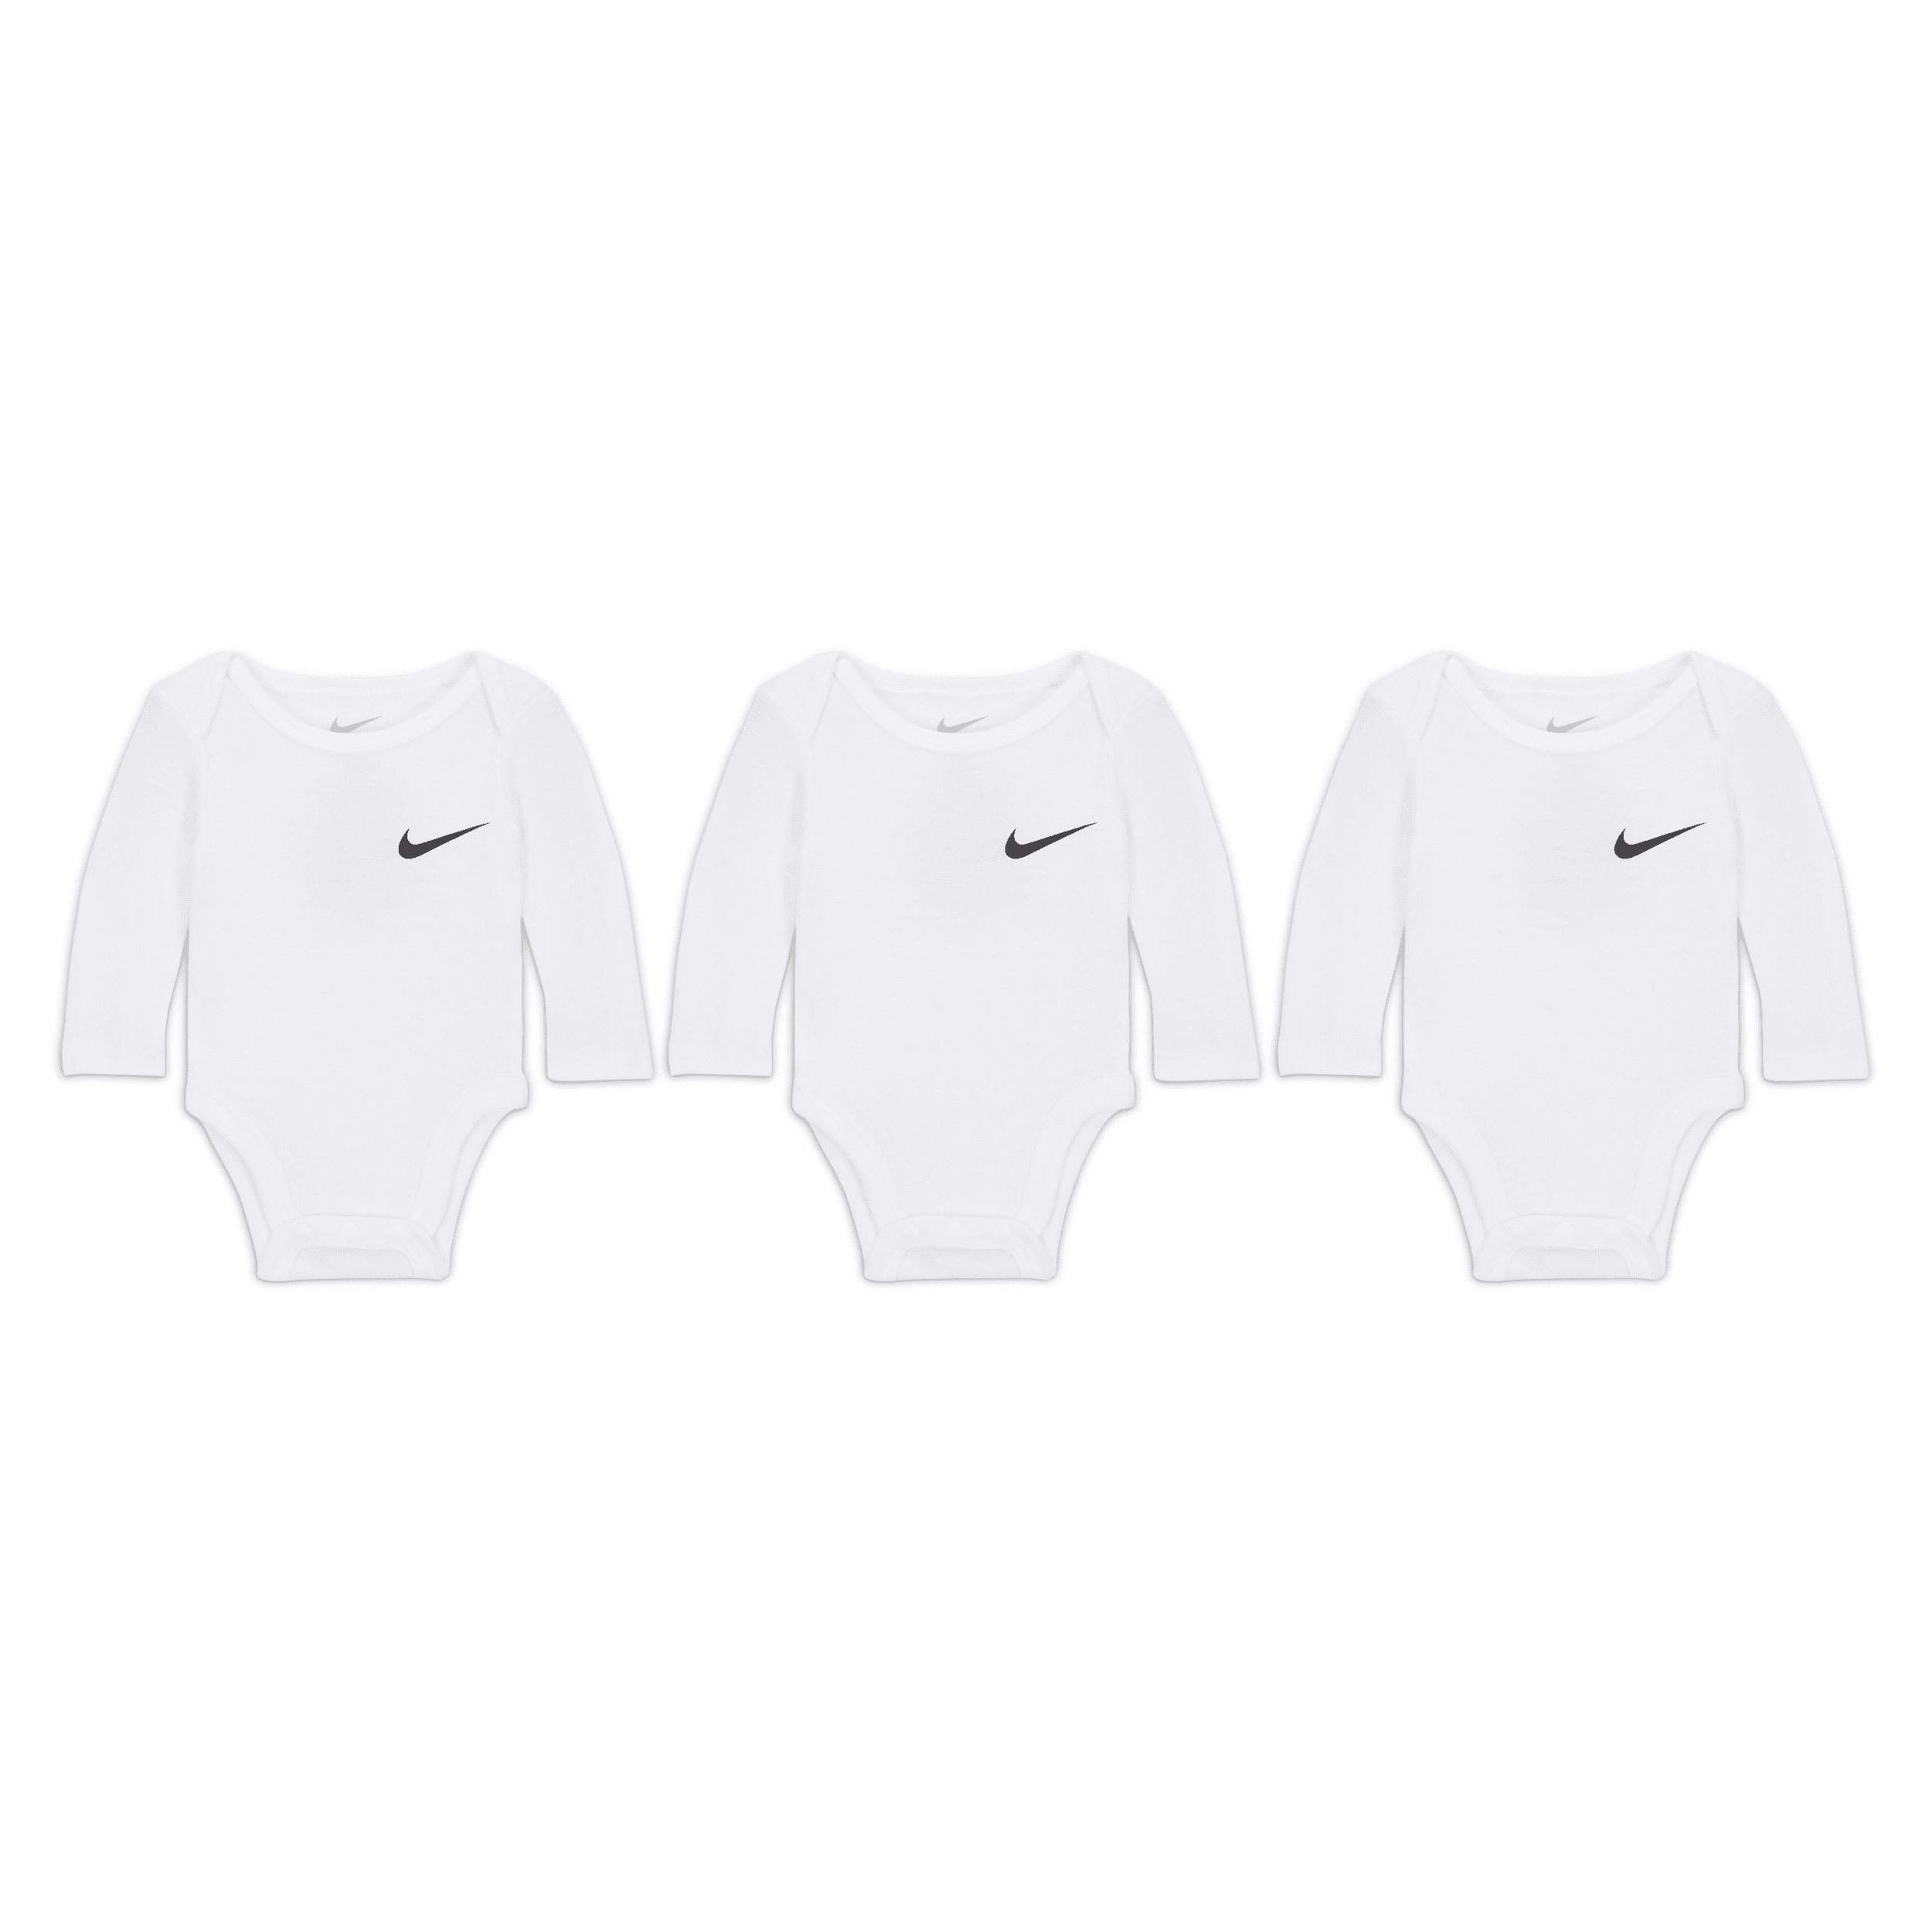 Nike Essentials 3-pack Long Sleeve Bodysuits Baby Bodysuit Pack In White